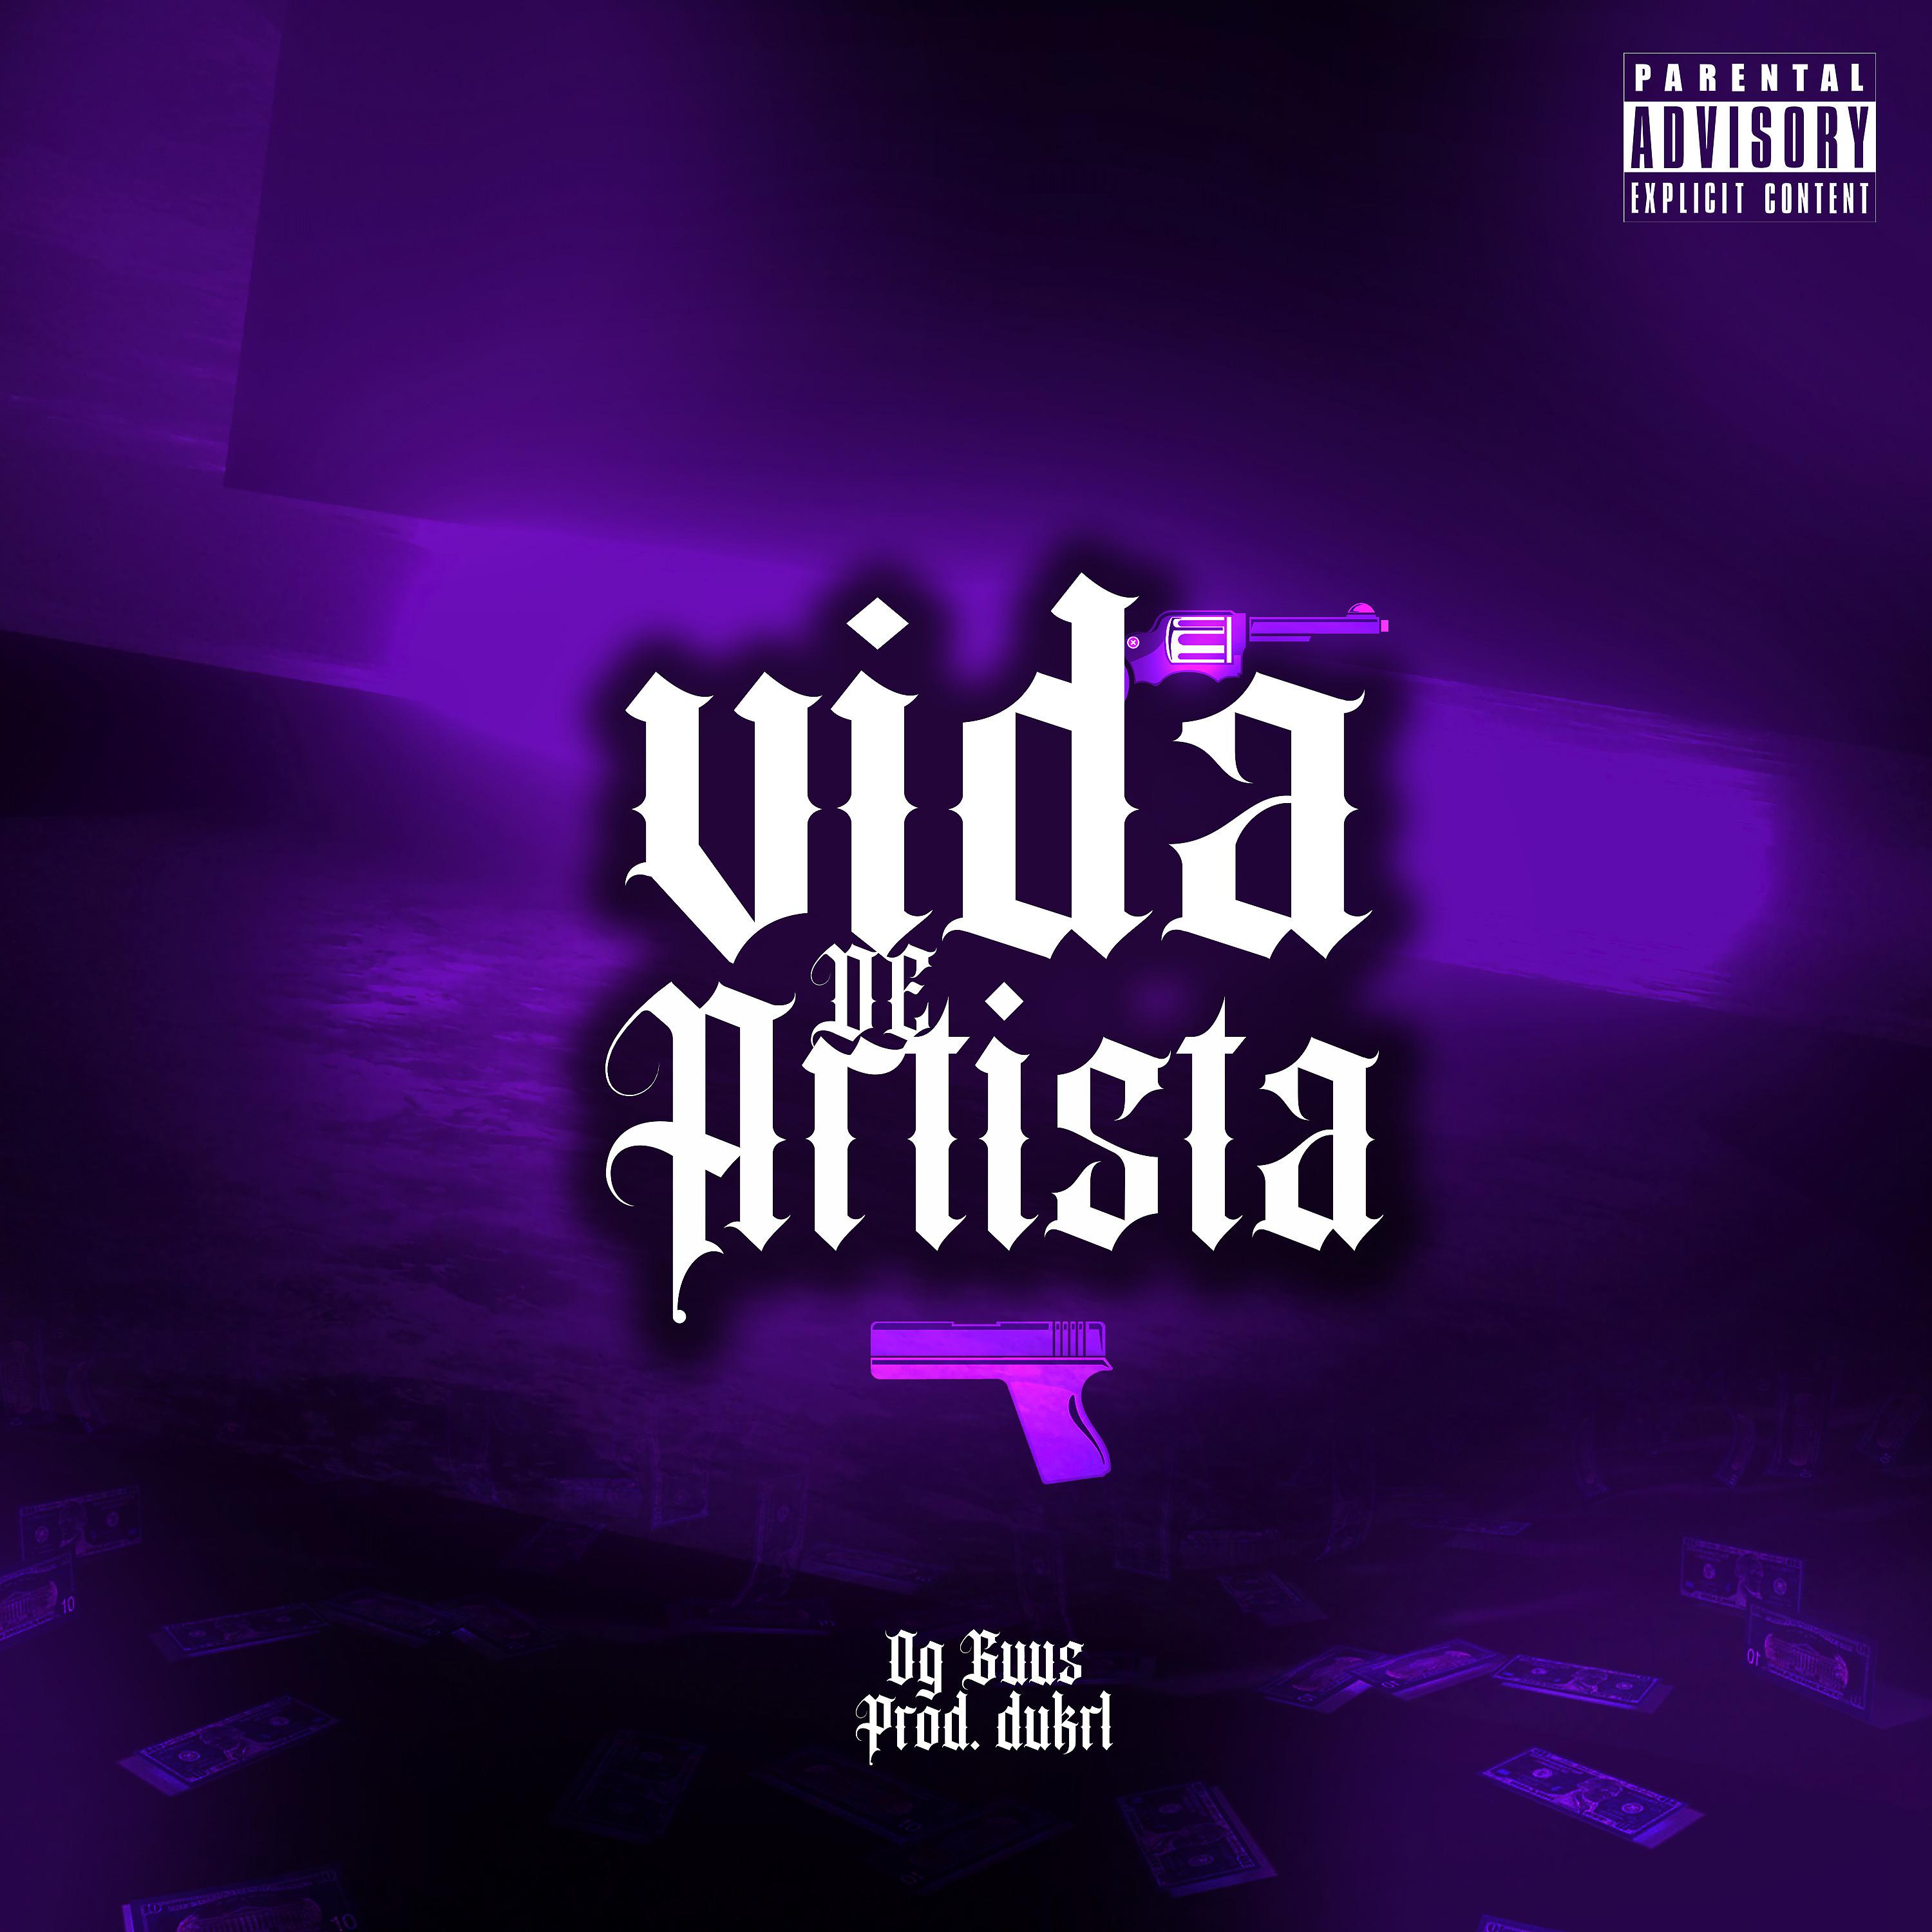 Постер альбома Vida de Artista